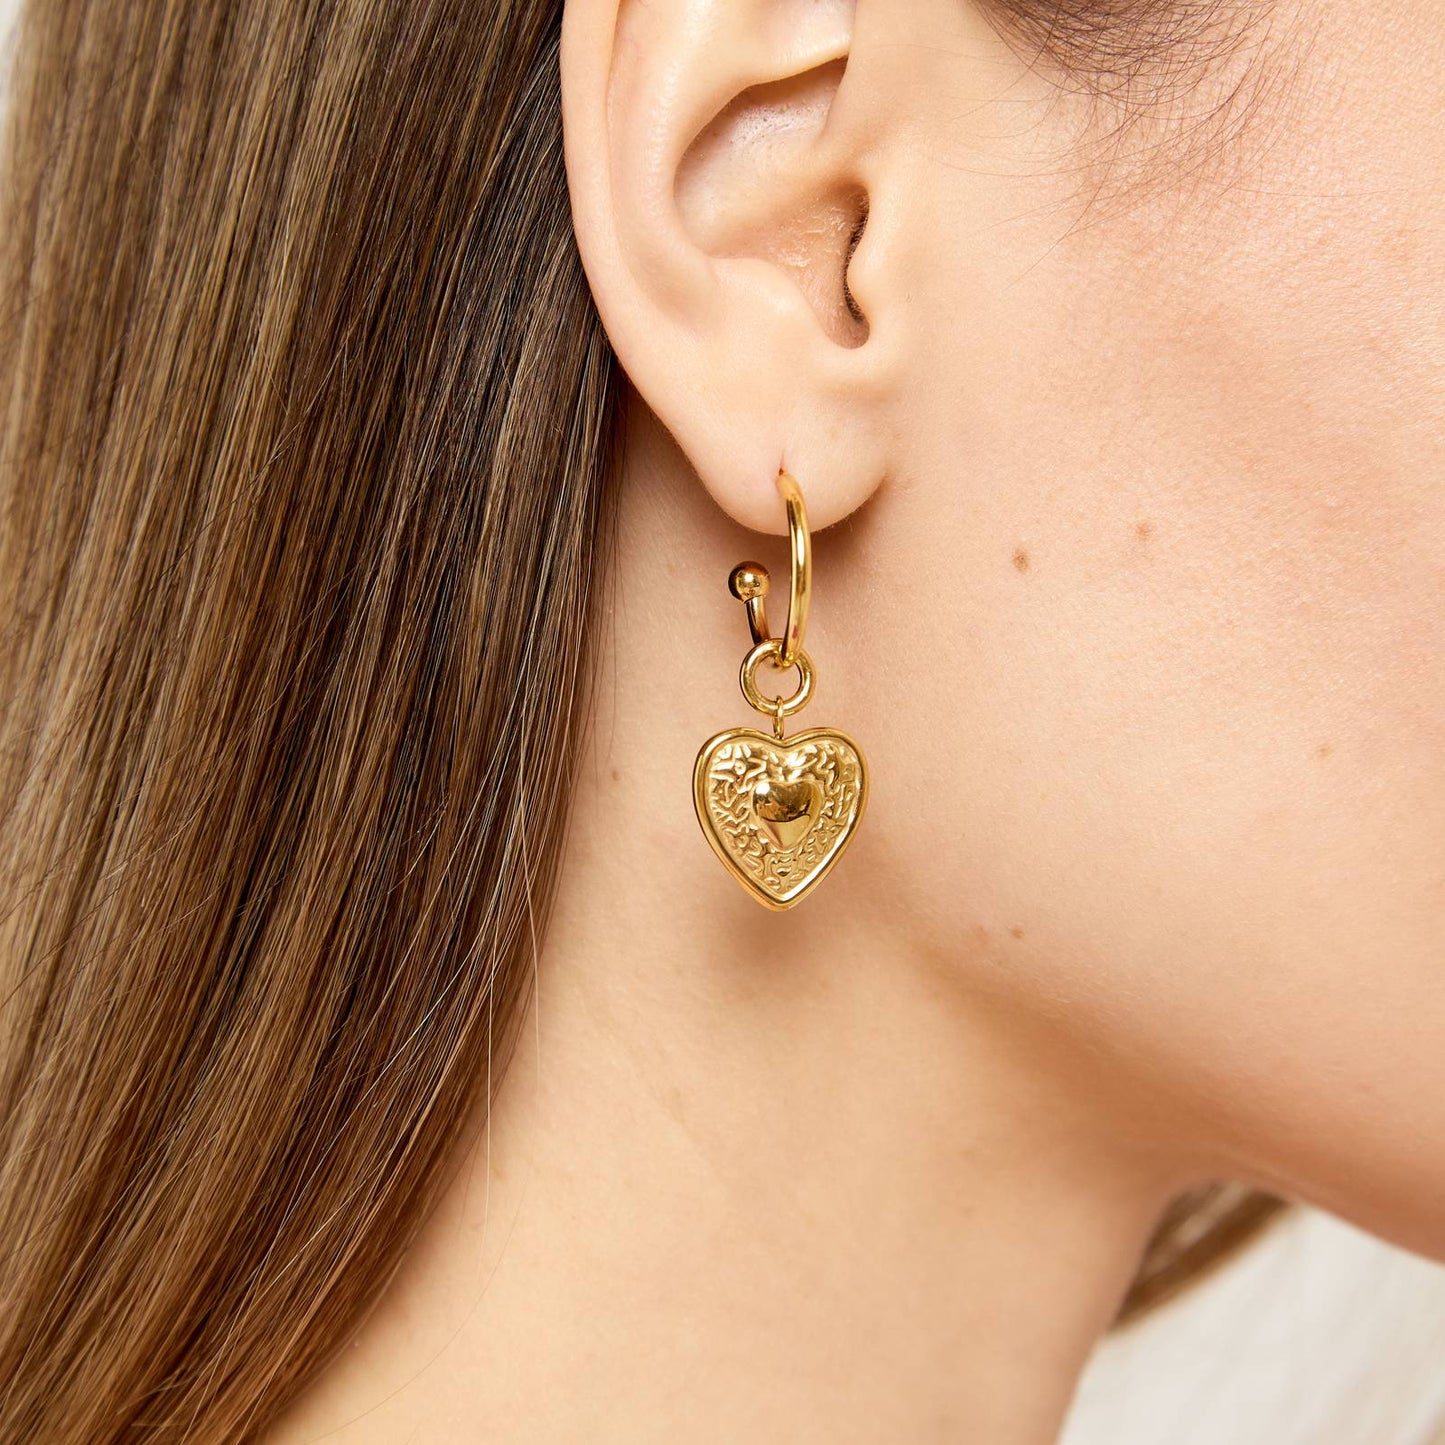 18K gold plated Stainless steel  Heart earrings